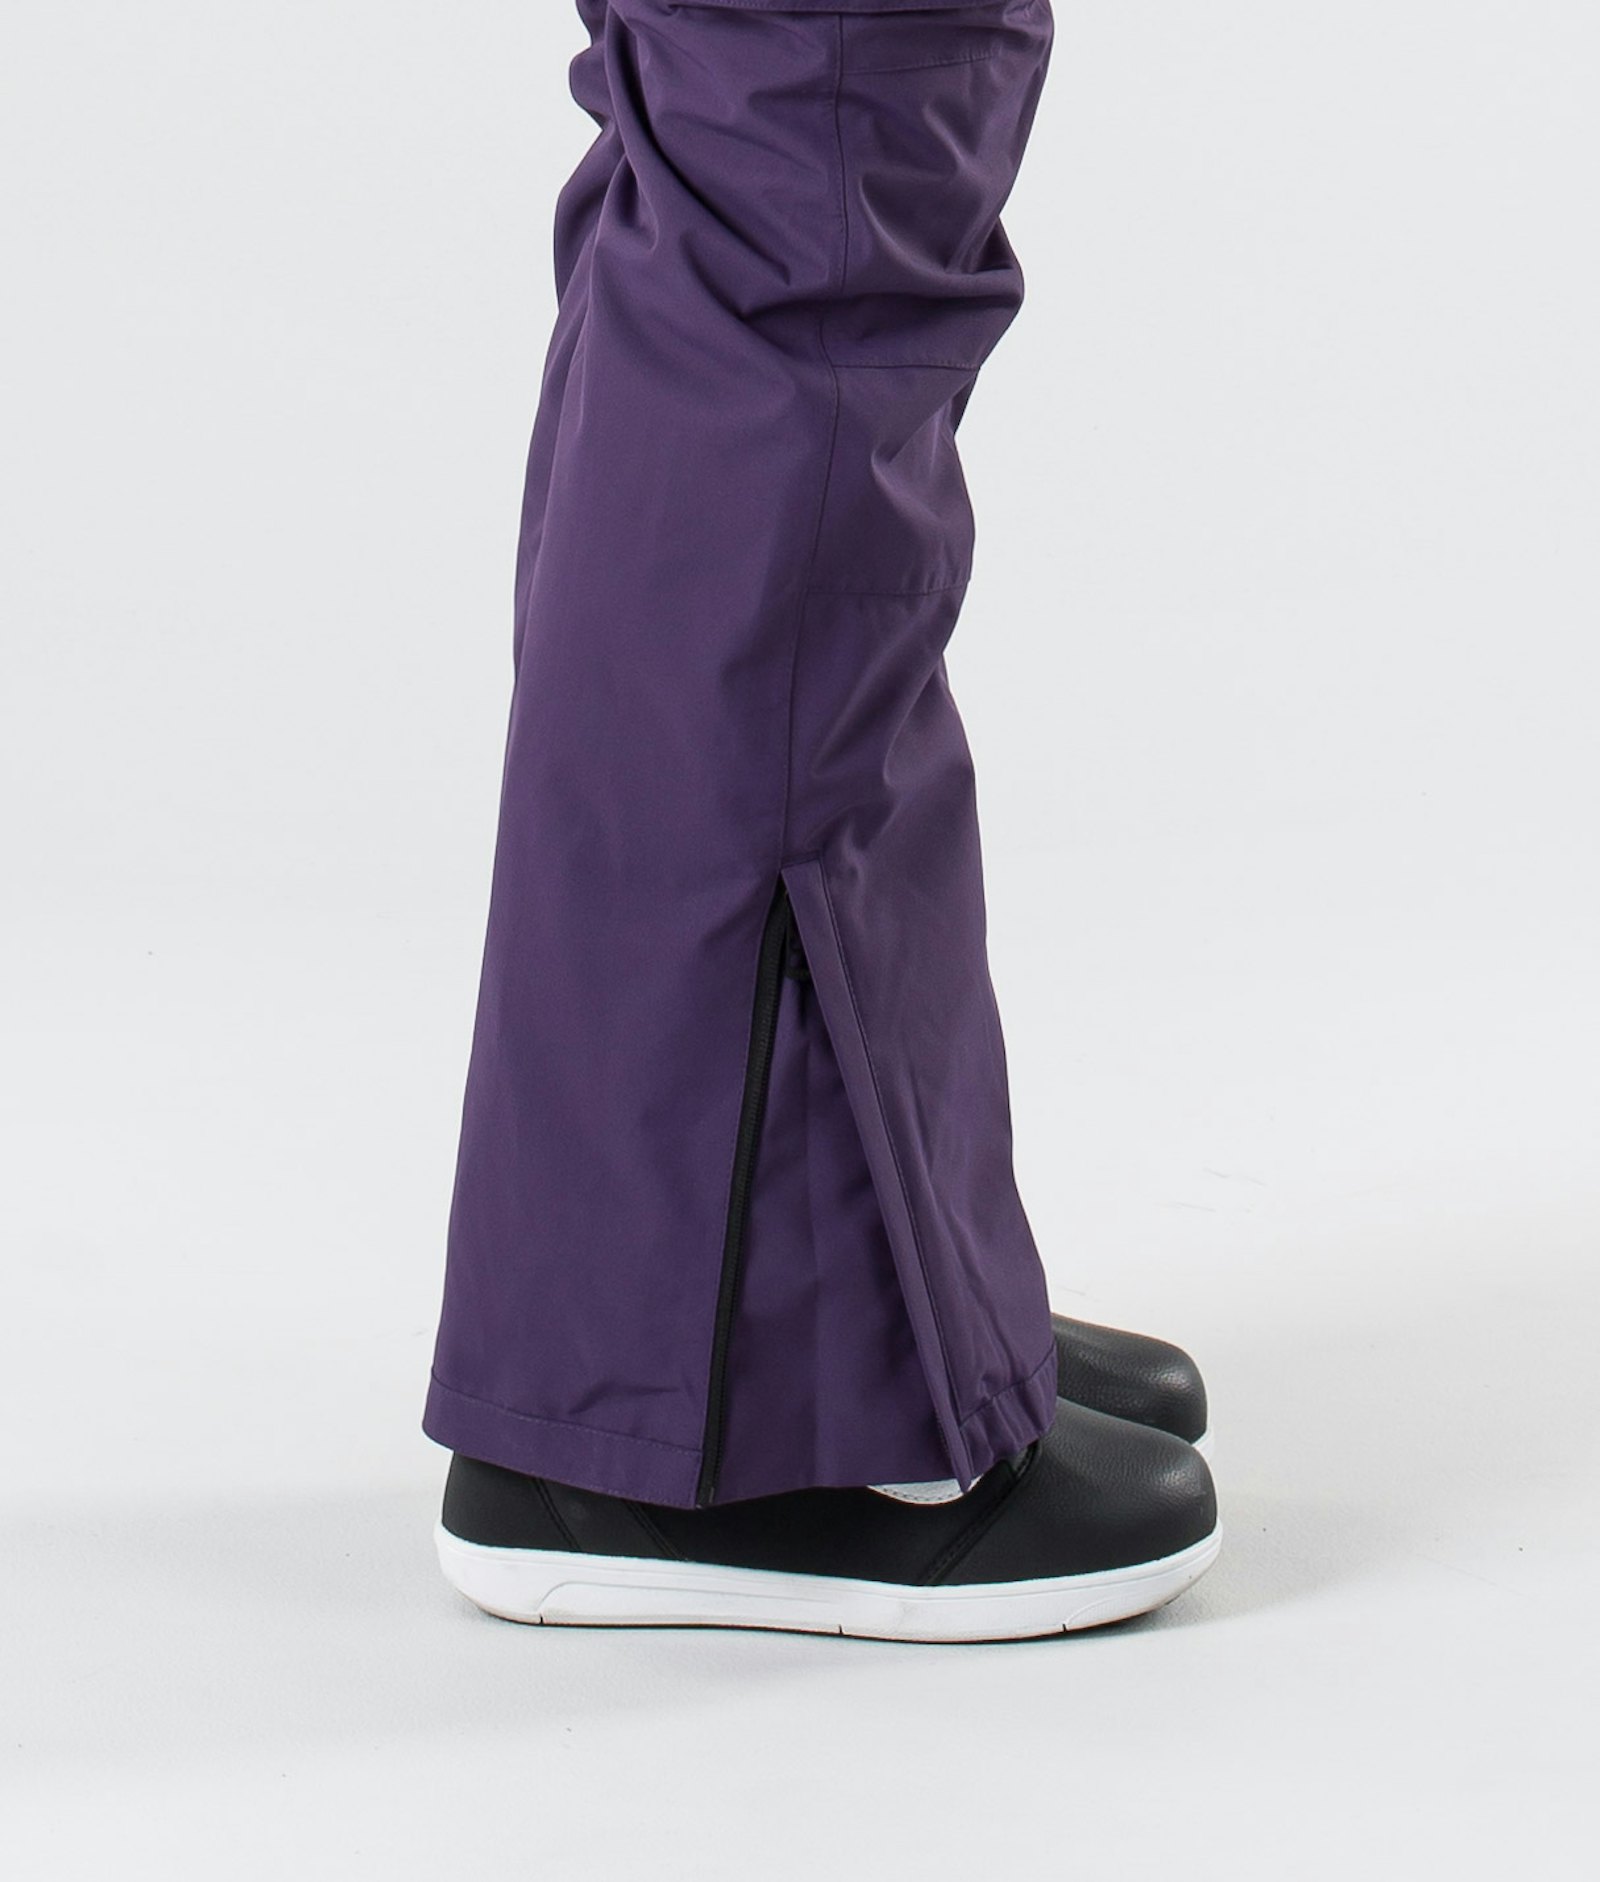 Dope Iconic W 2019 Pantalon de Snowboard Femme Grape